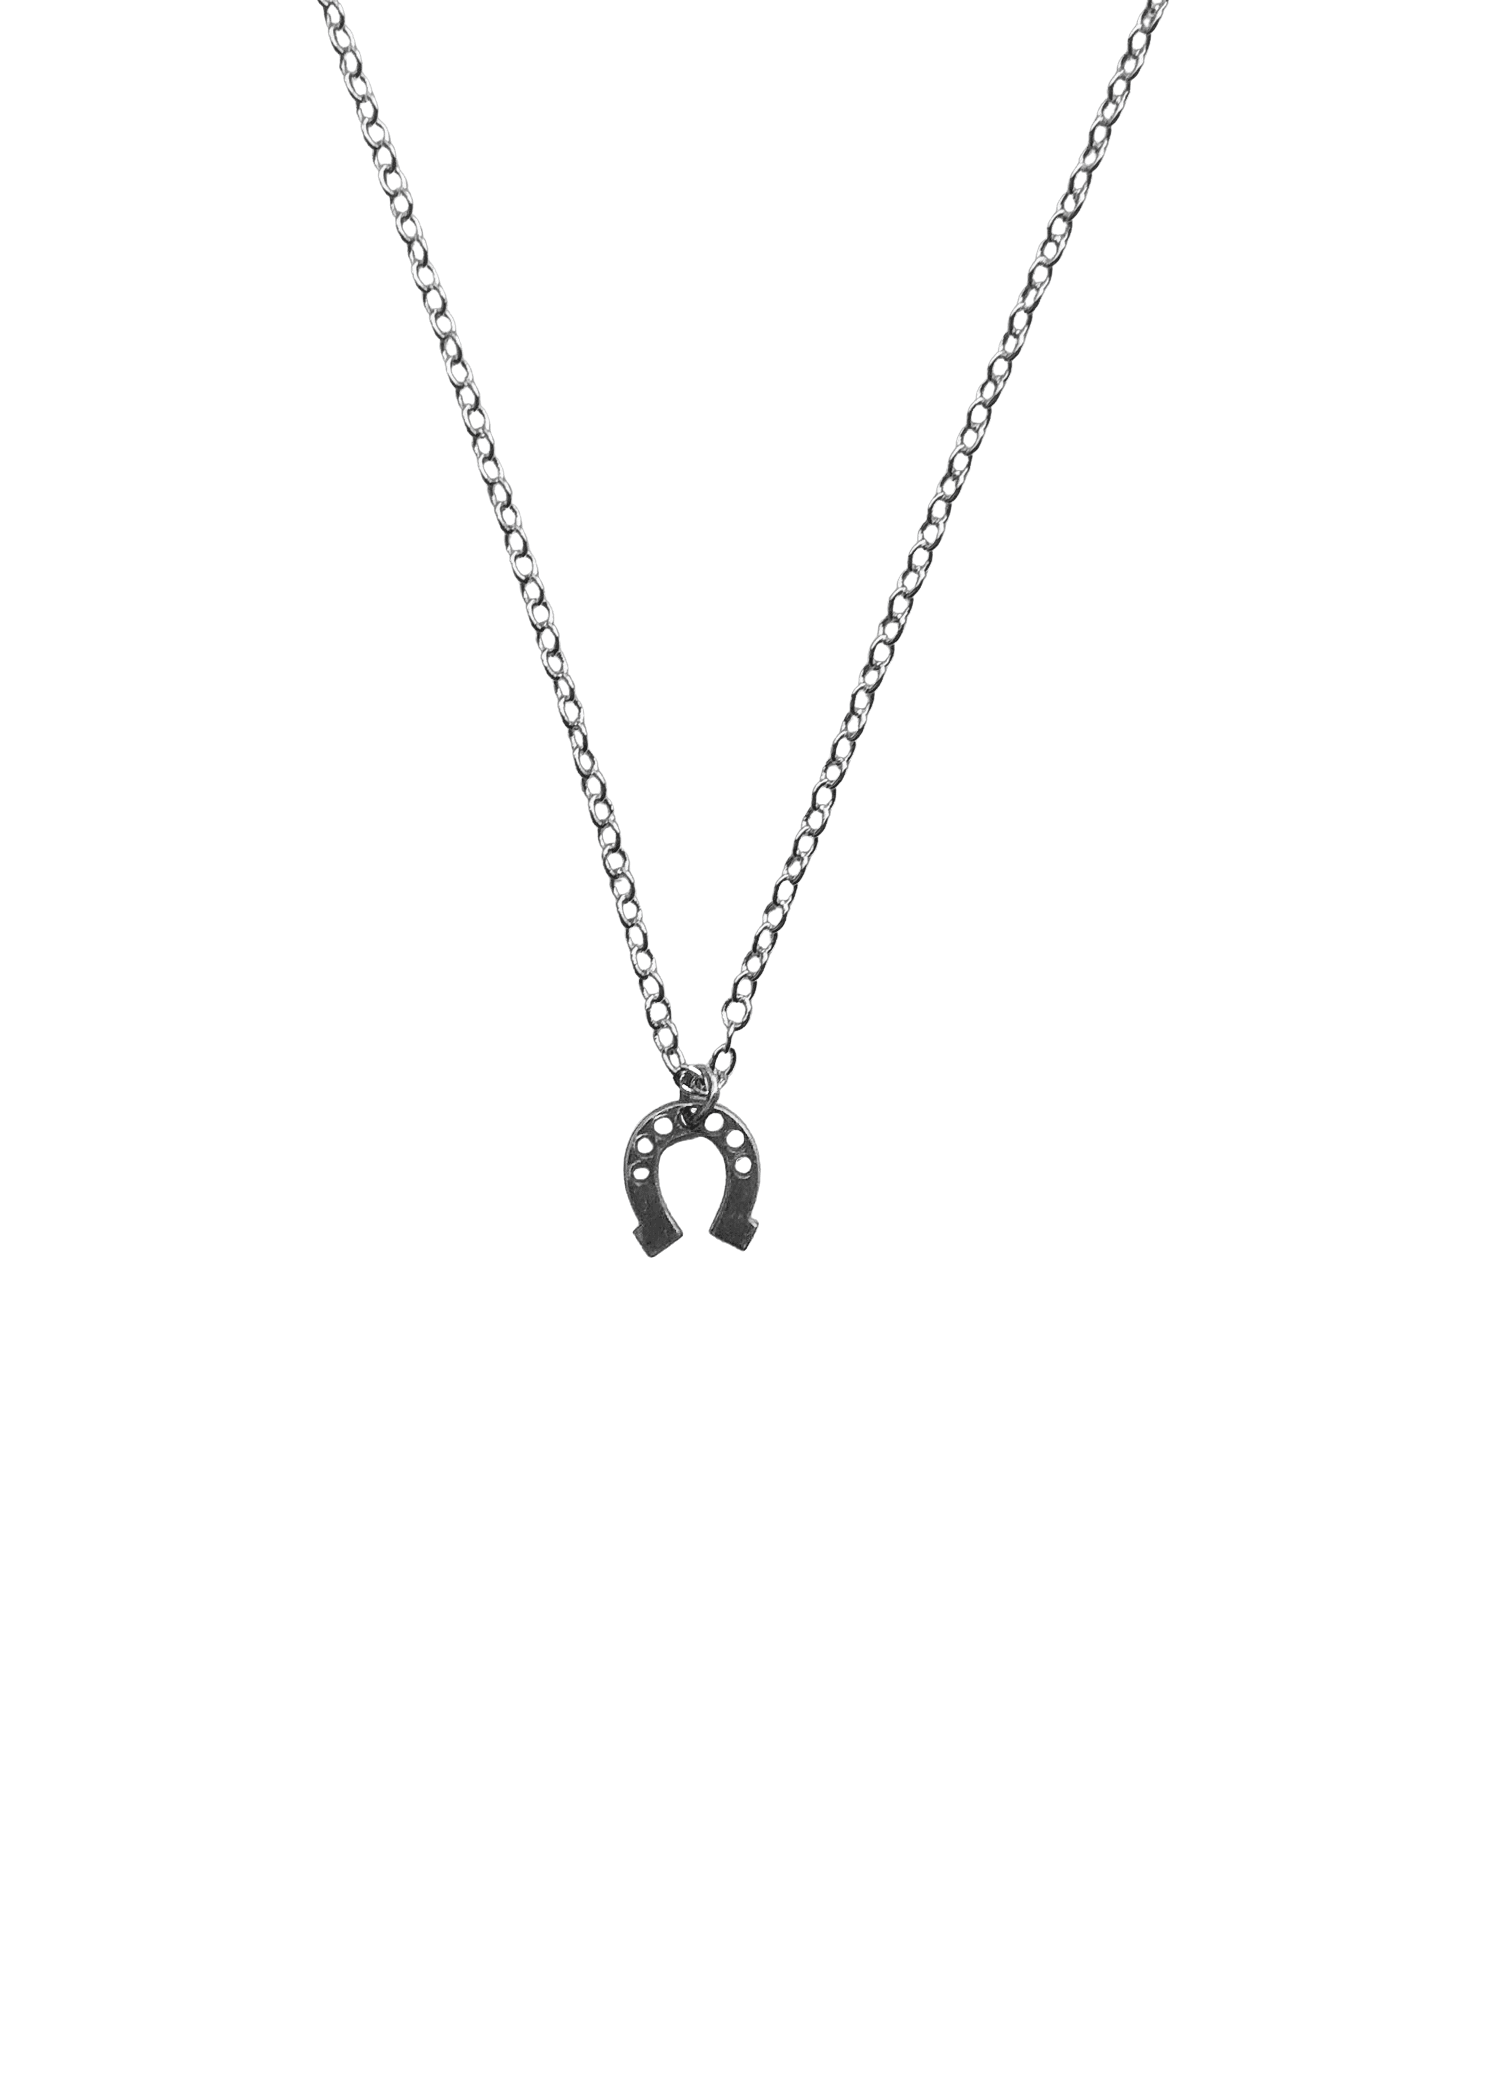 Horseshoe Charm Necklace - Silver - offe market